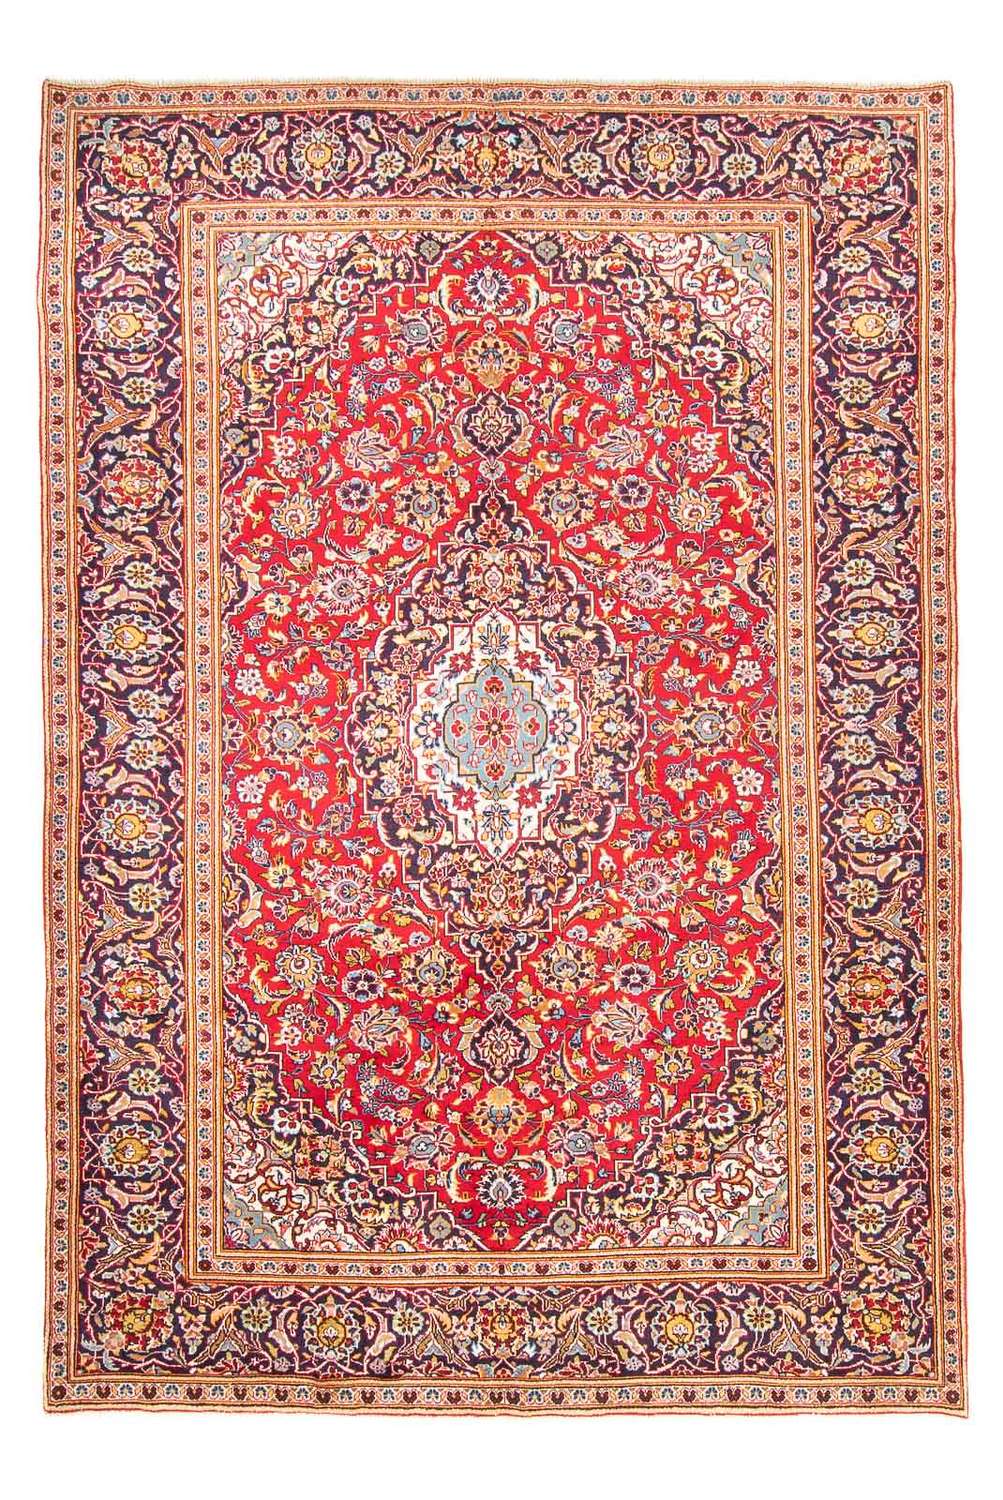 Tapis persan - Keshan - 290 x 195 cm - rouge